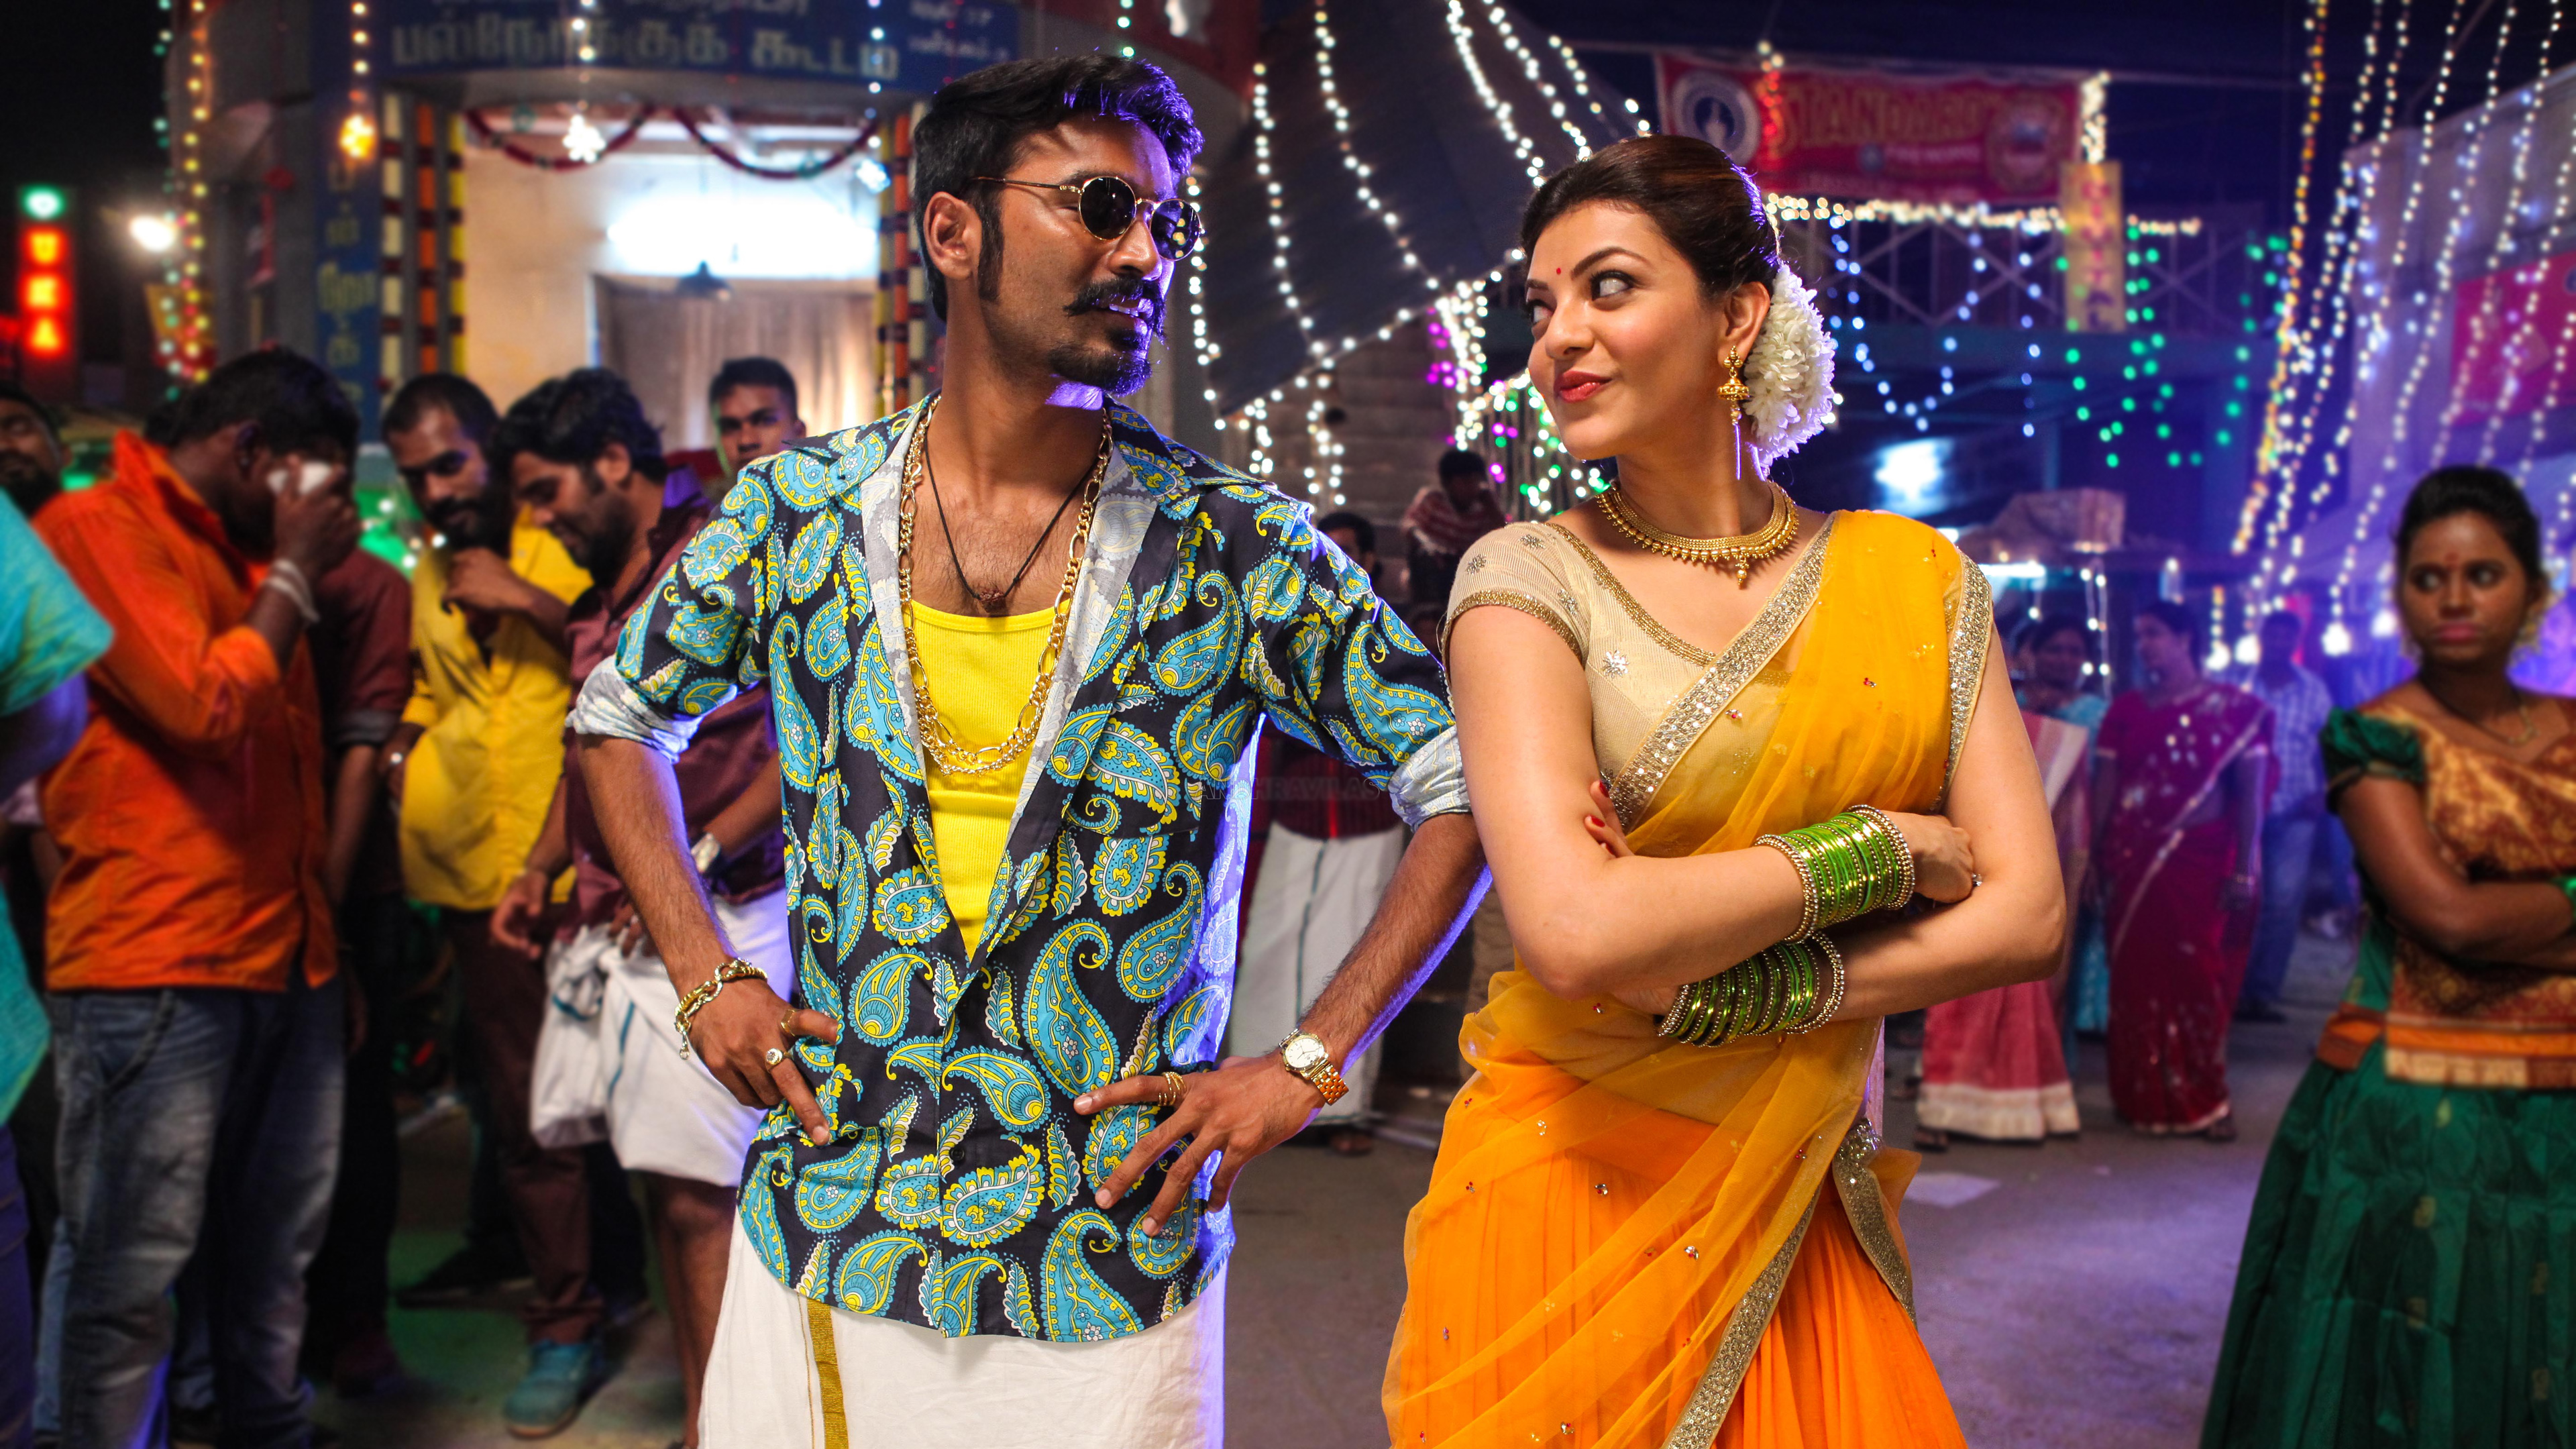 tamil movie hd wallpaper,event,marriage,yellow,sari,ceremony